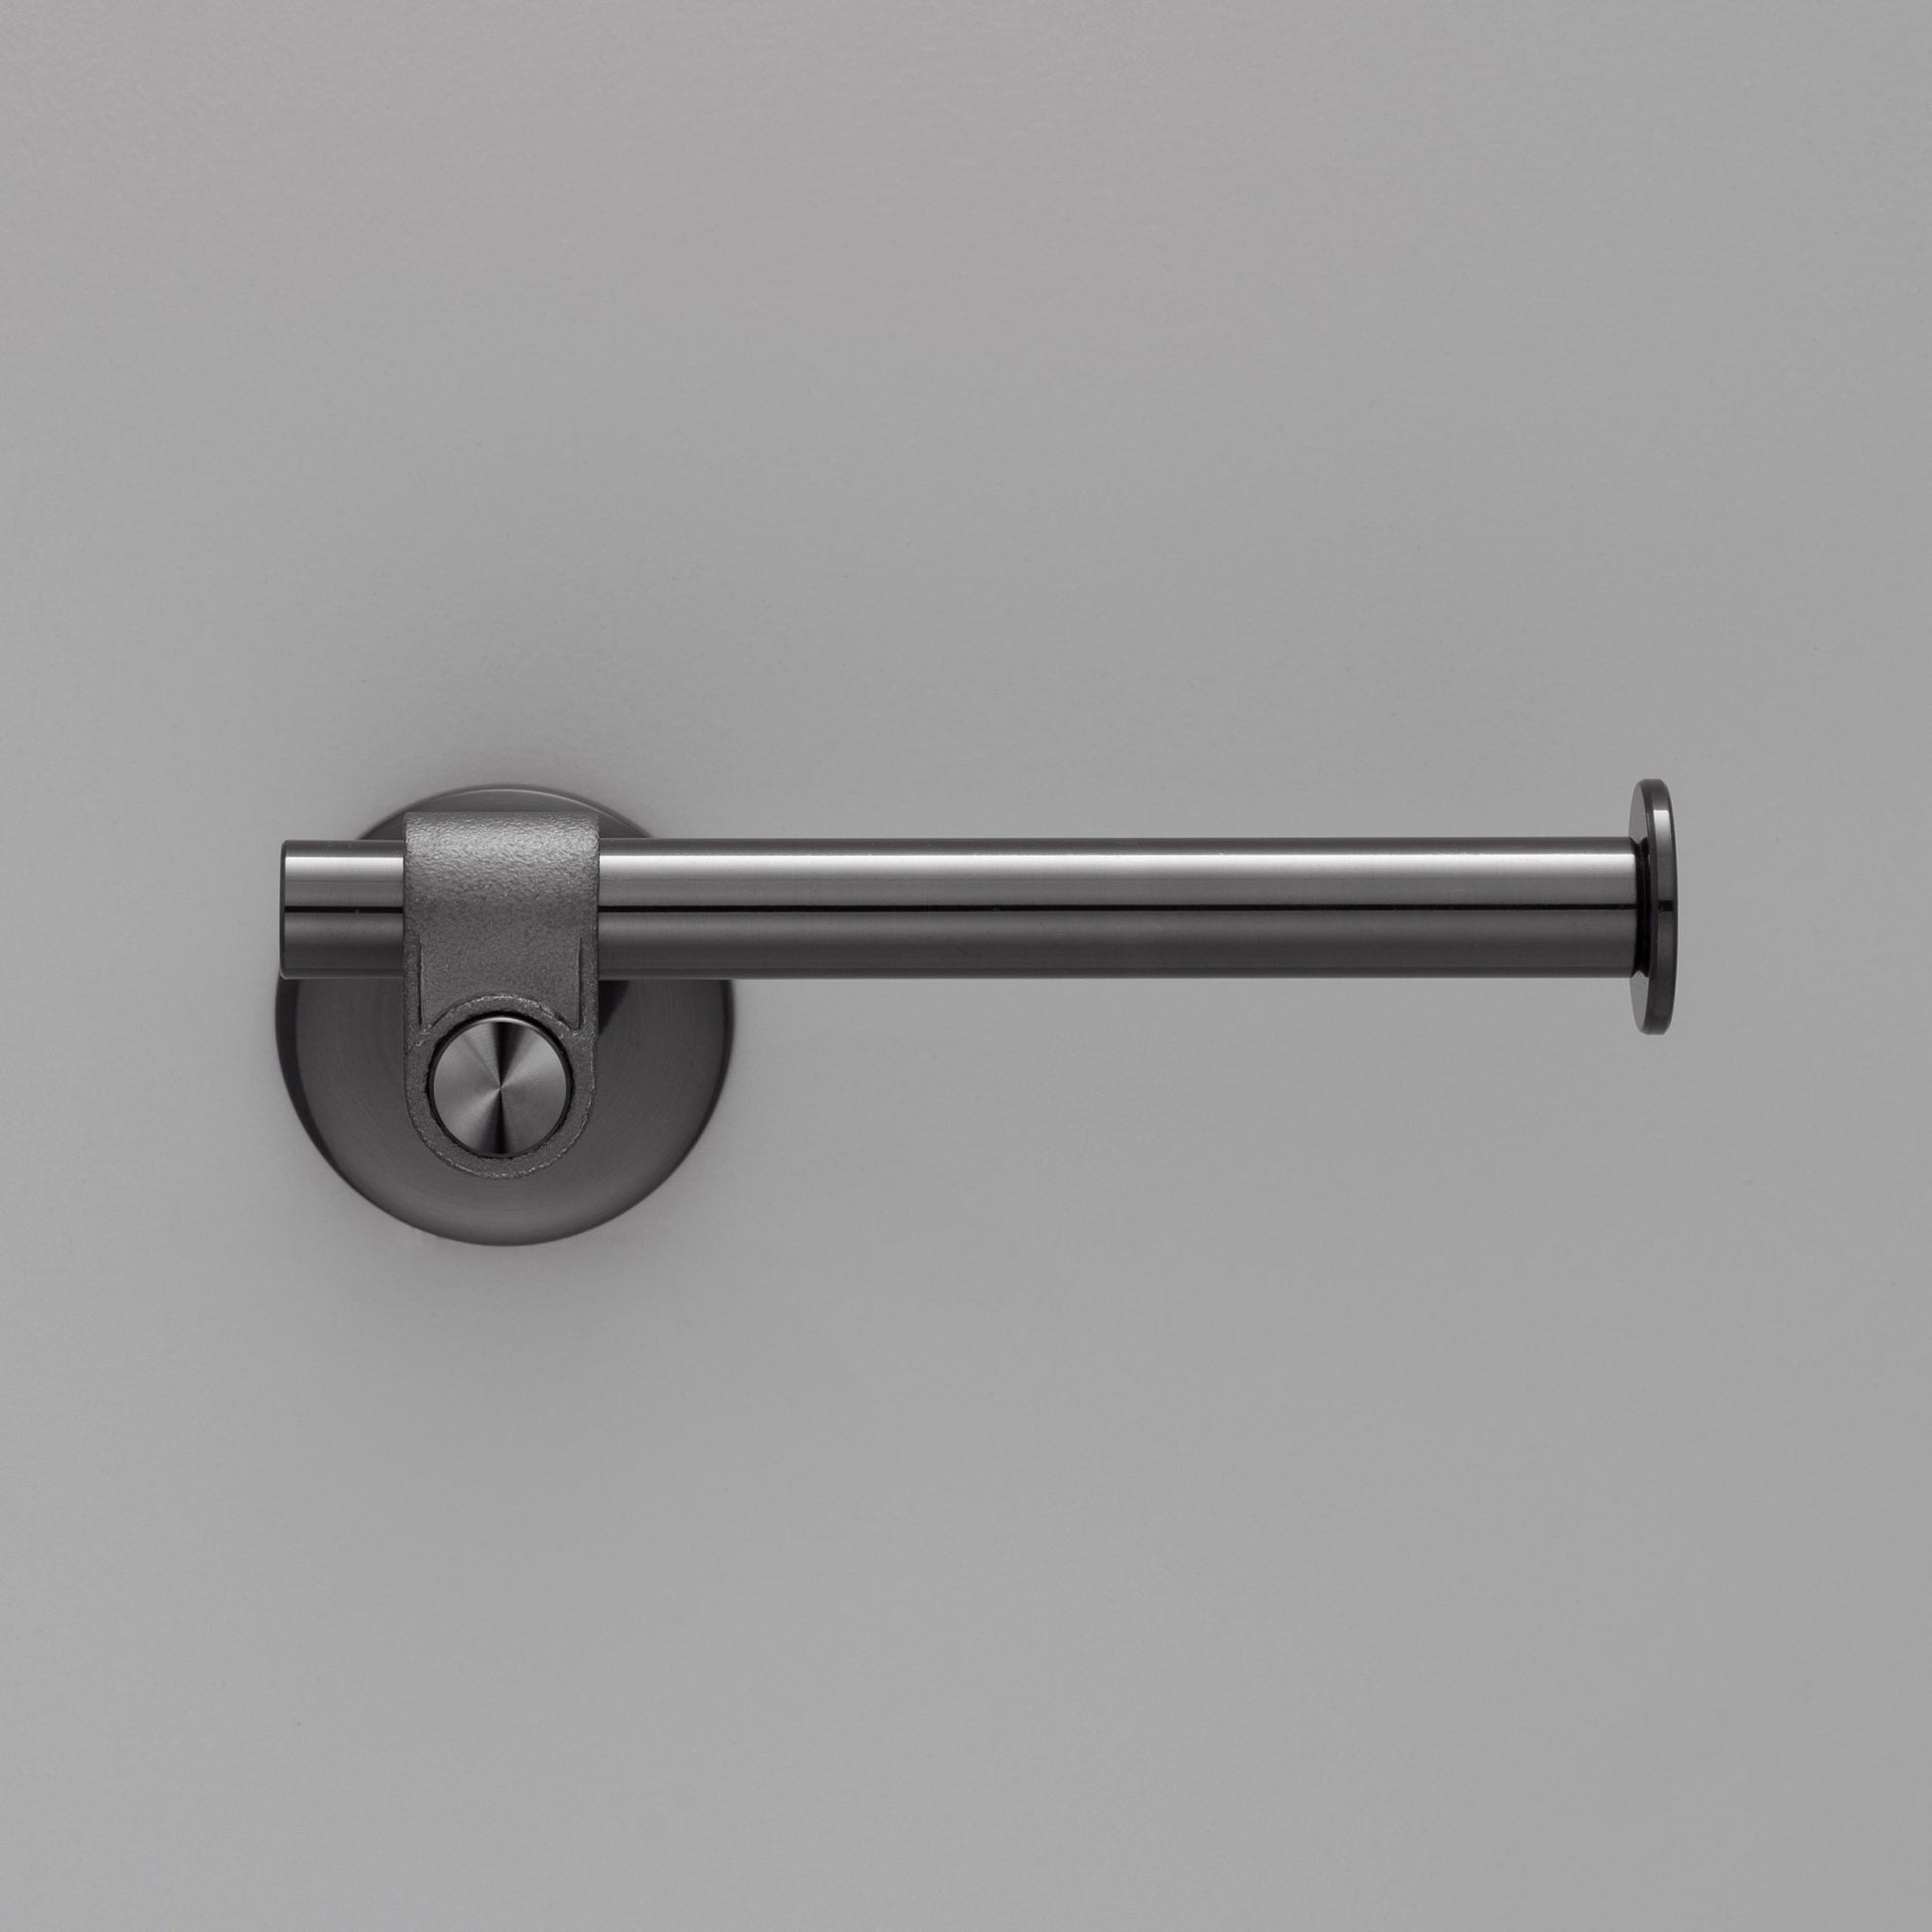 Luxury Gun Metal Toilet Paper Holder - |VESIMI Design| Luxury and Rustic bathrooms online